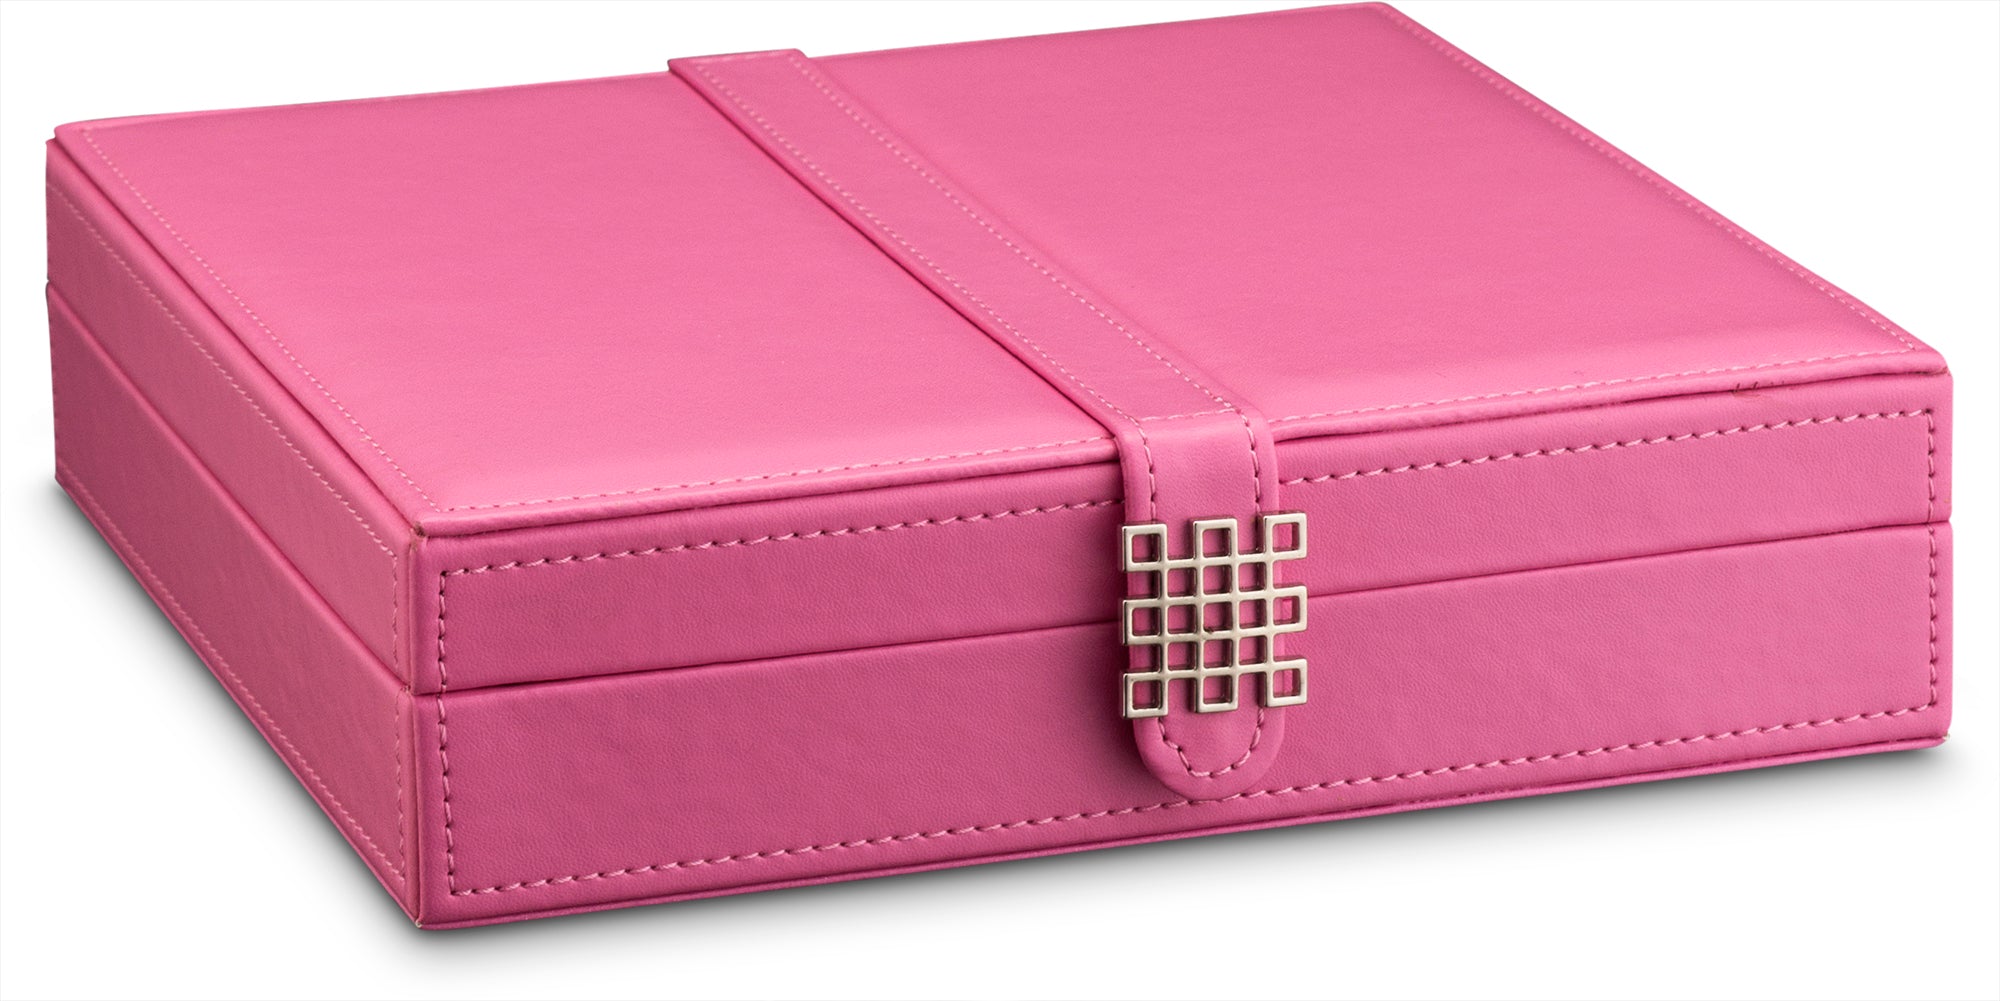 Earring Organizer Box - 25 Slots / Pink